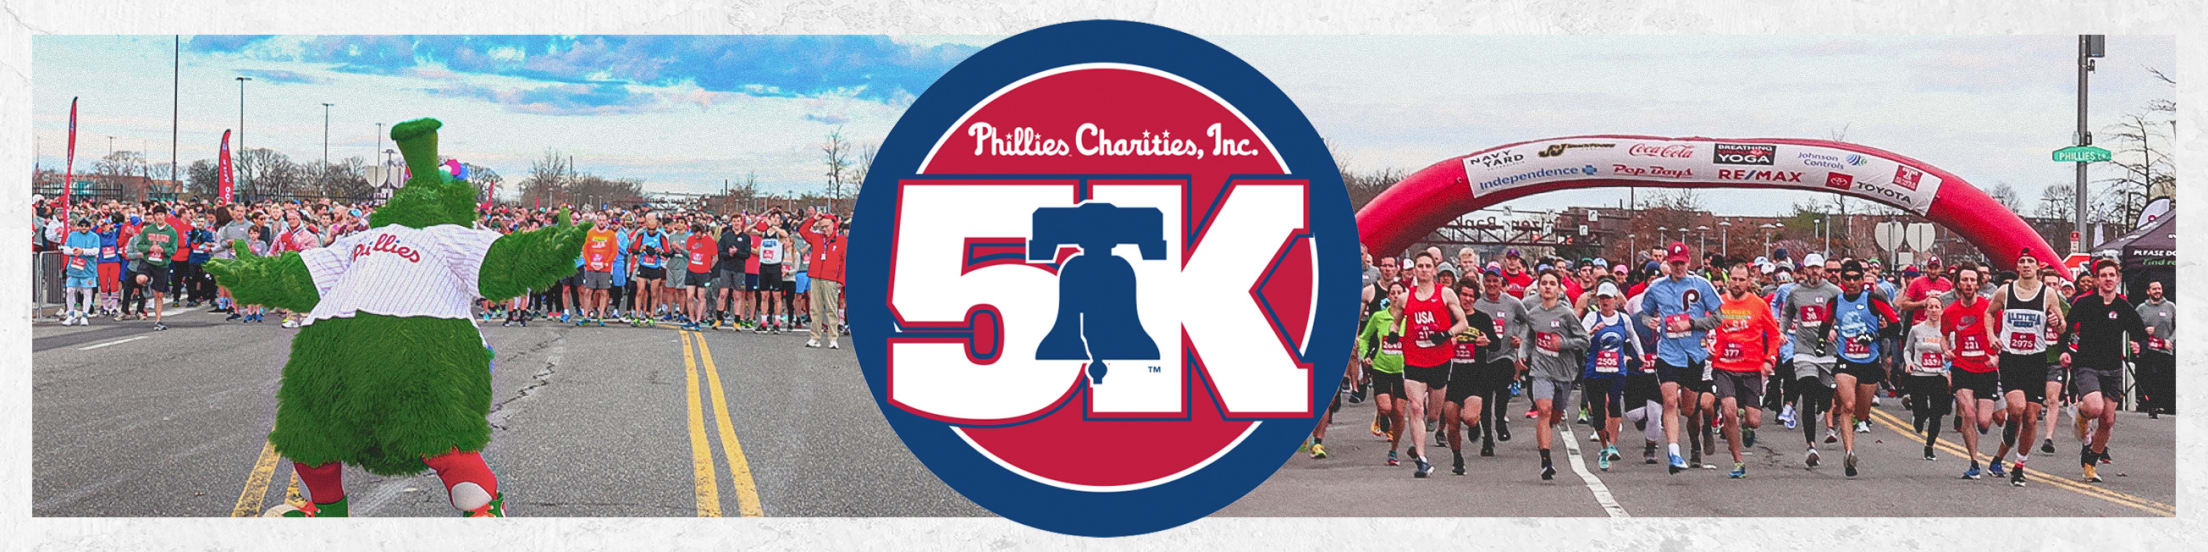 Phillies Charities 5K Philadelphia Phillies